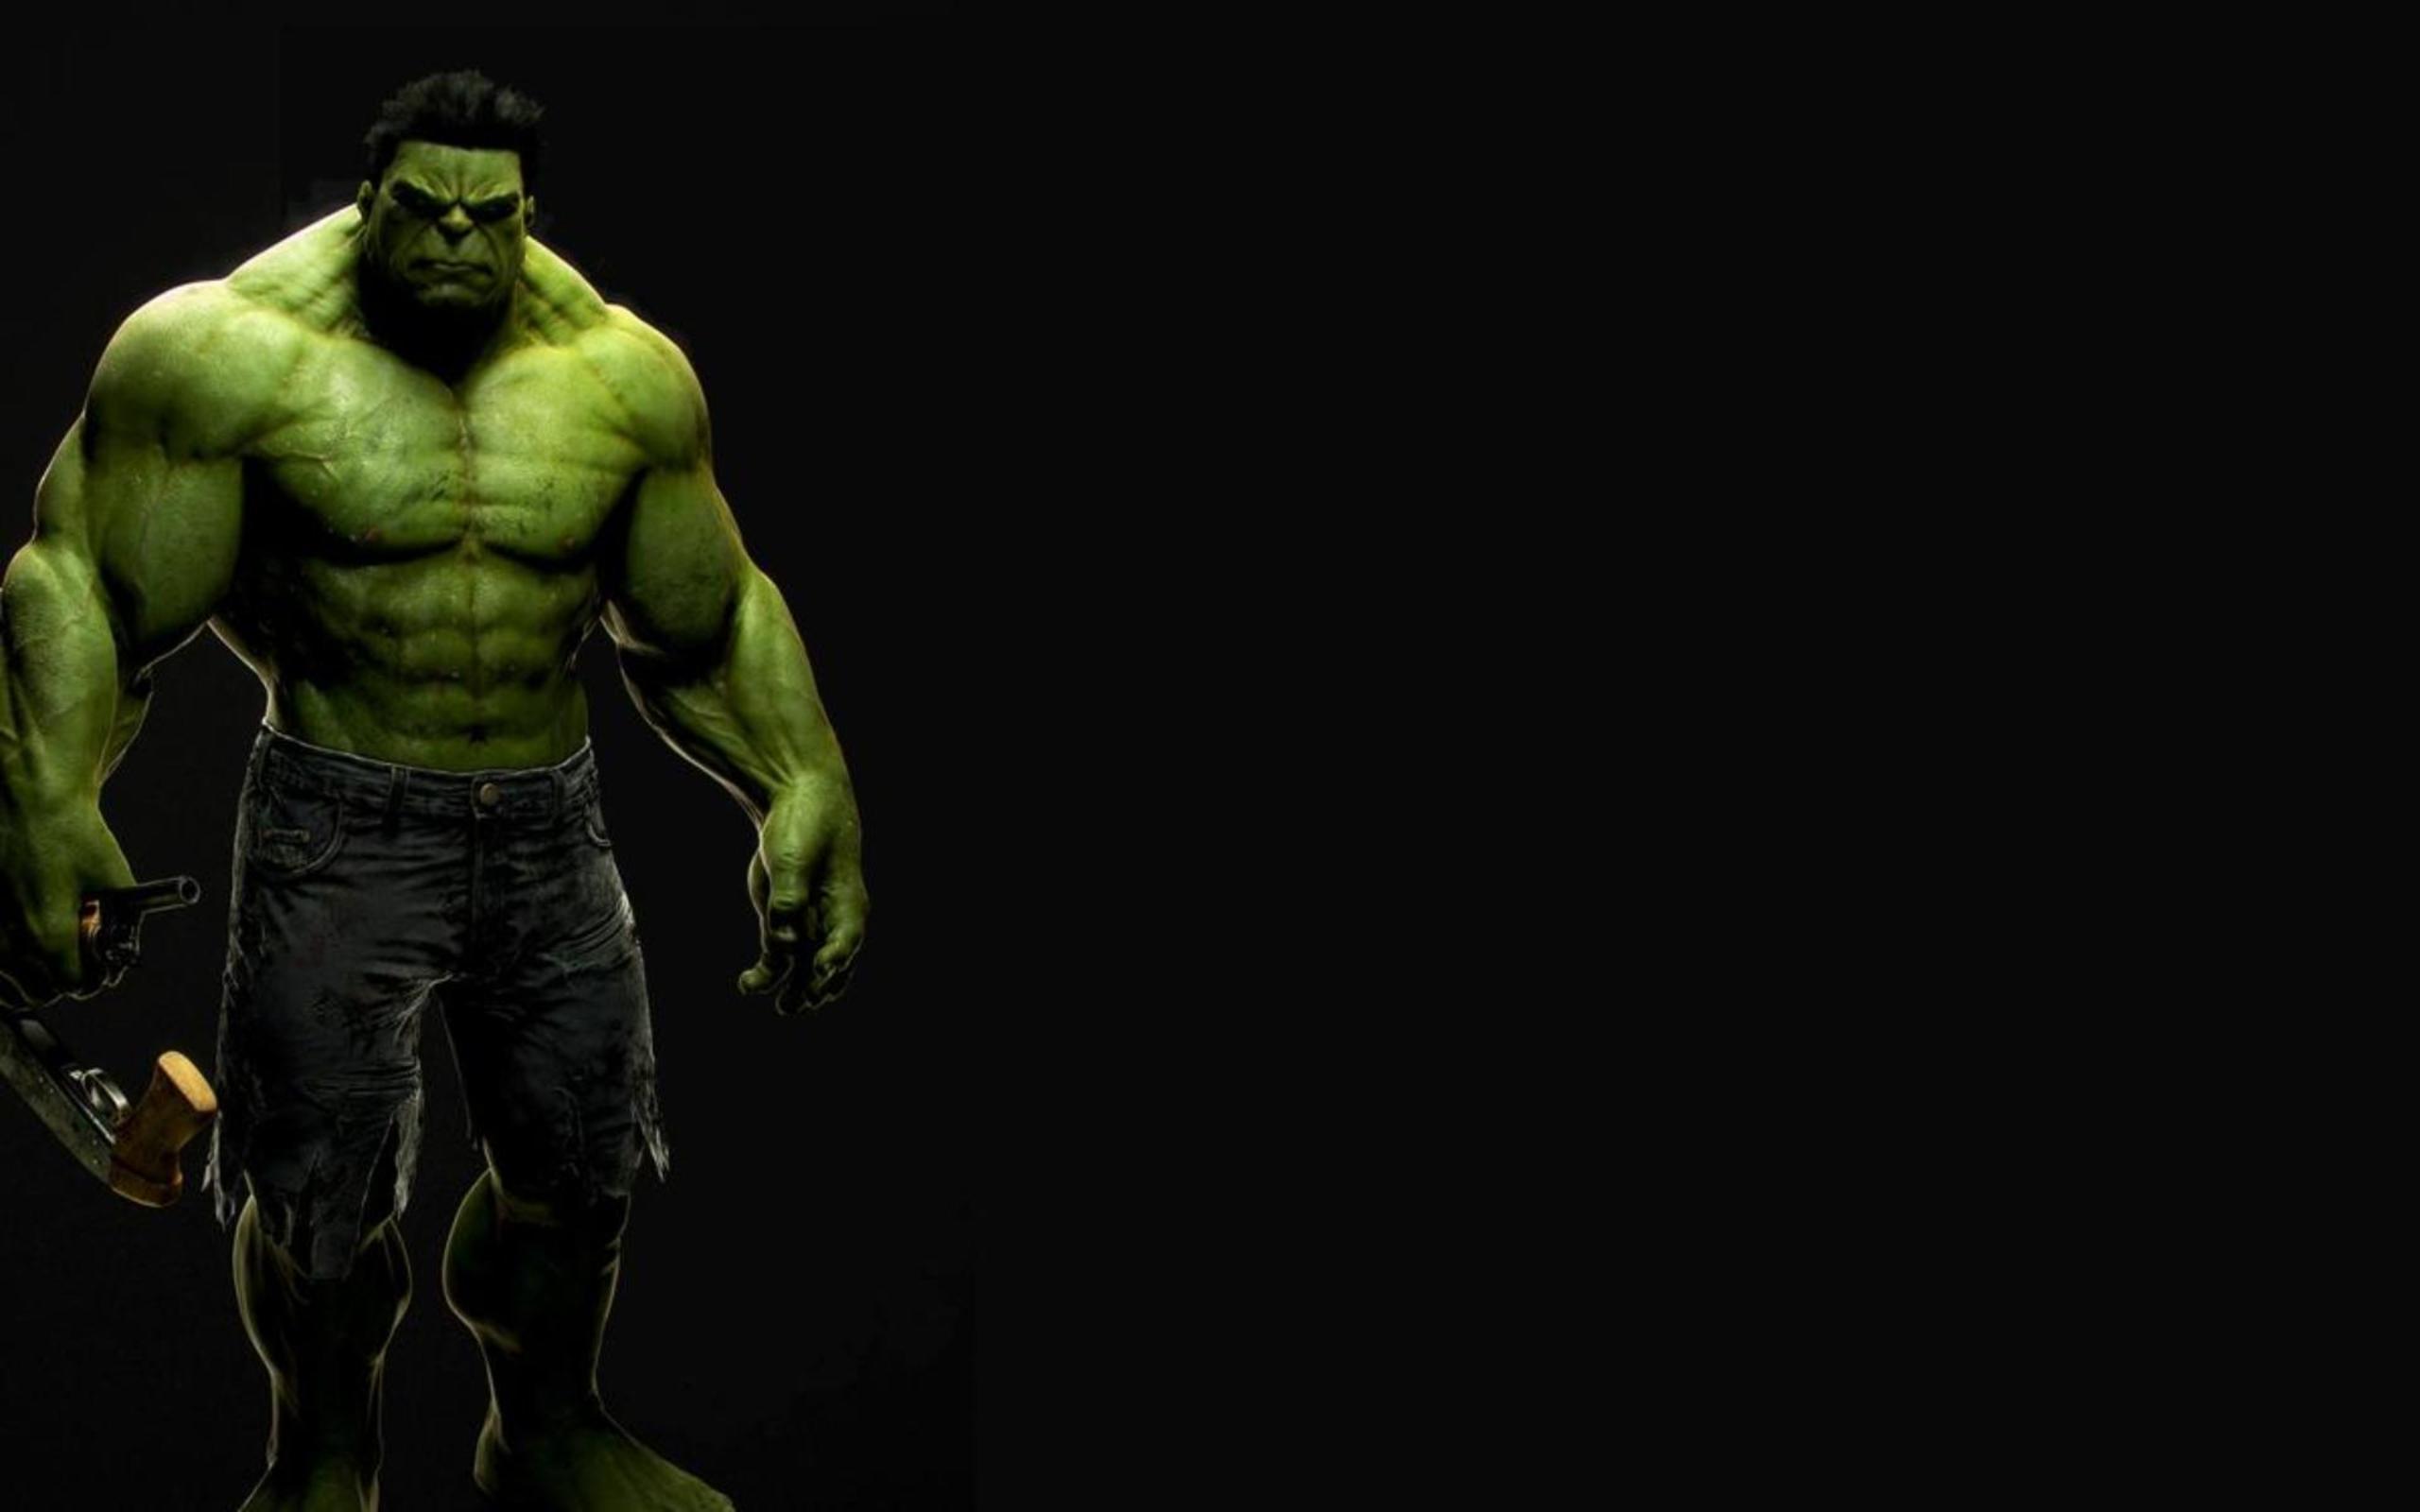 Dark Hulk Wallpaper HD. Wallpaper, Background, Image, Art Photo